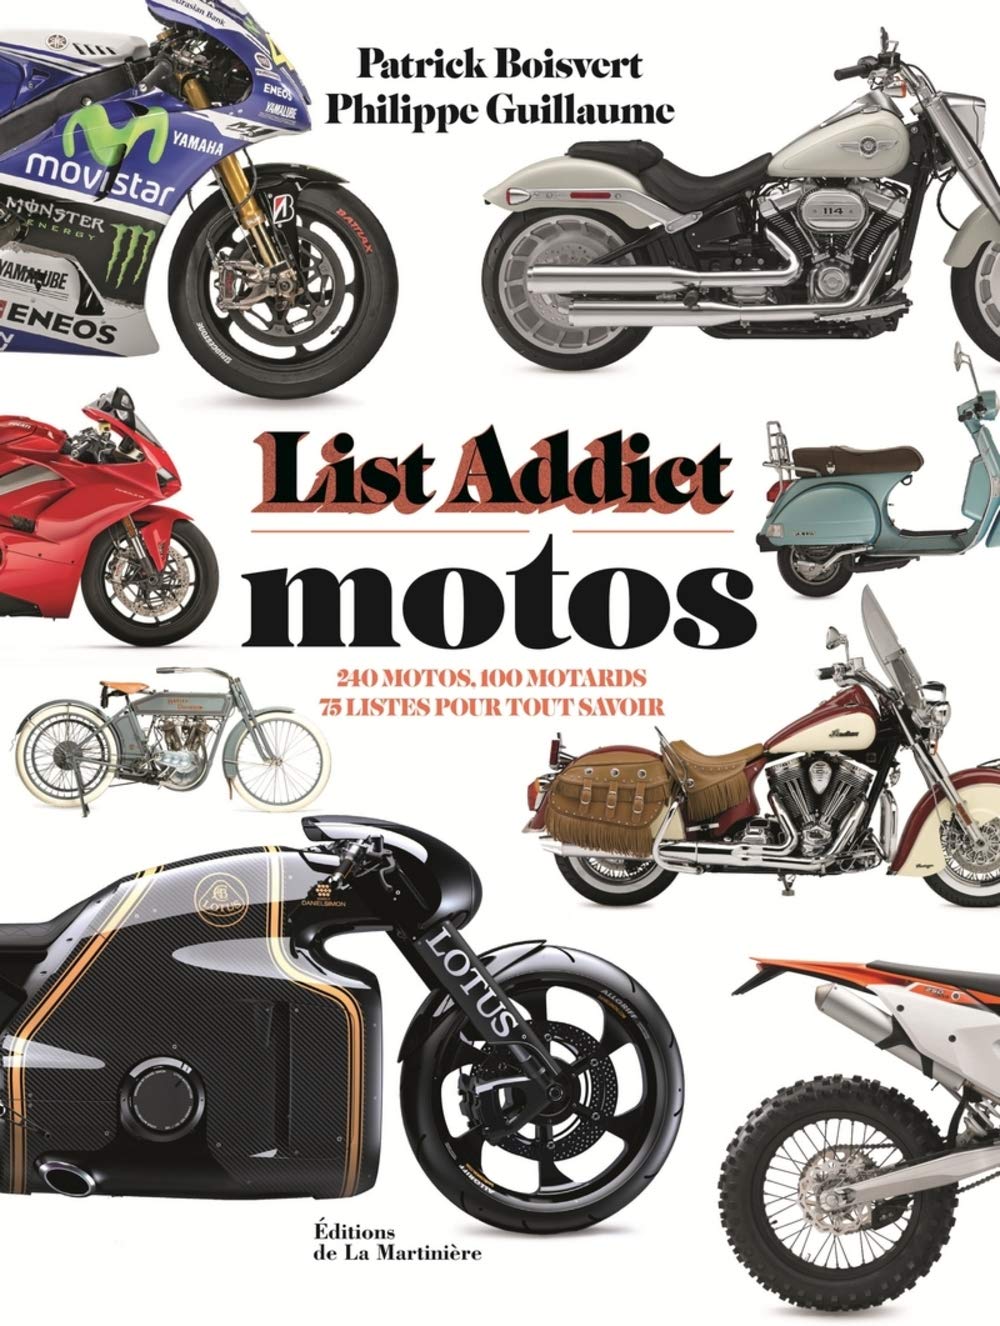 Nasoalne Gardien Moto, Motard Gardien Moto, Good Luck Accessoires Moto,  breloque Cadeau Moto pour Motard Homme